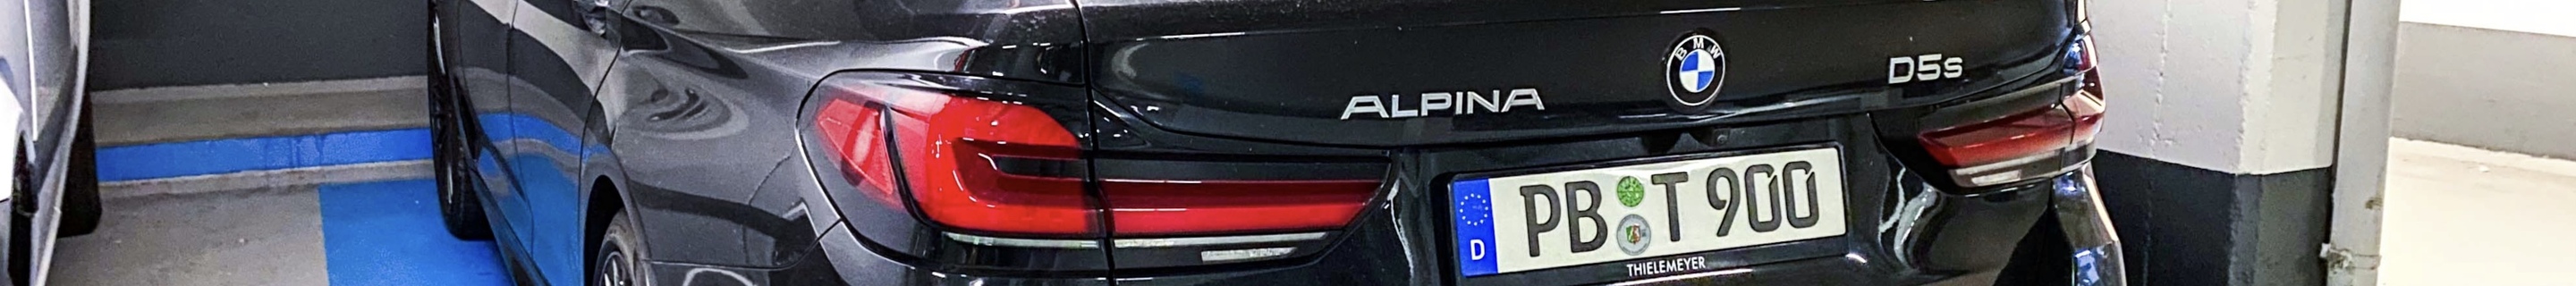 Alpina D5 S Allrad Touring 2021